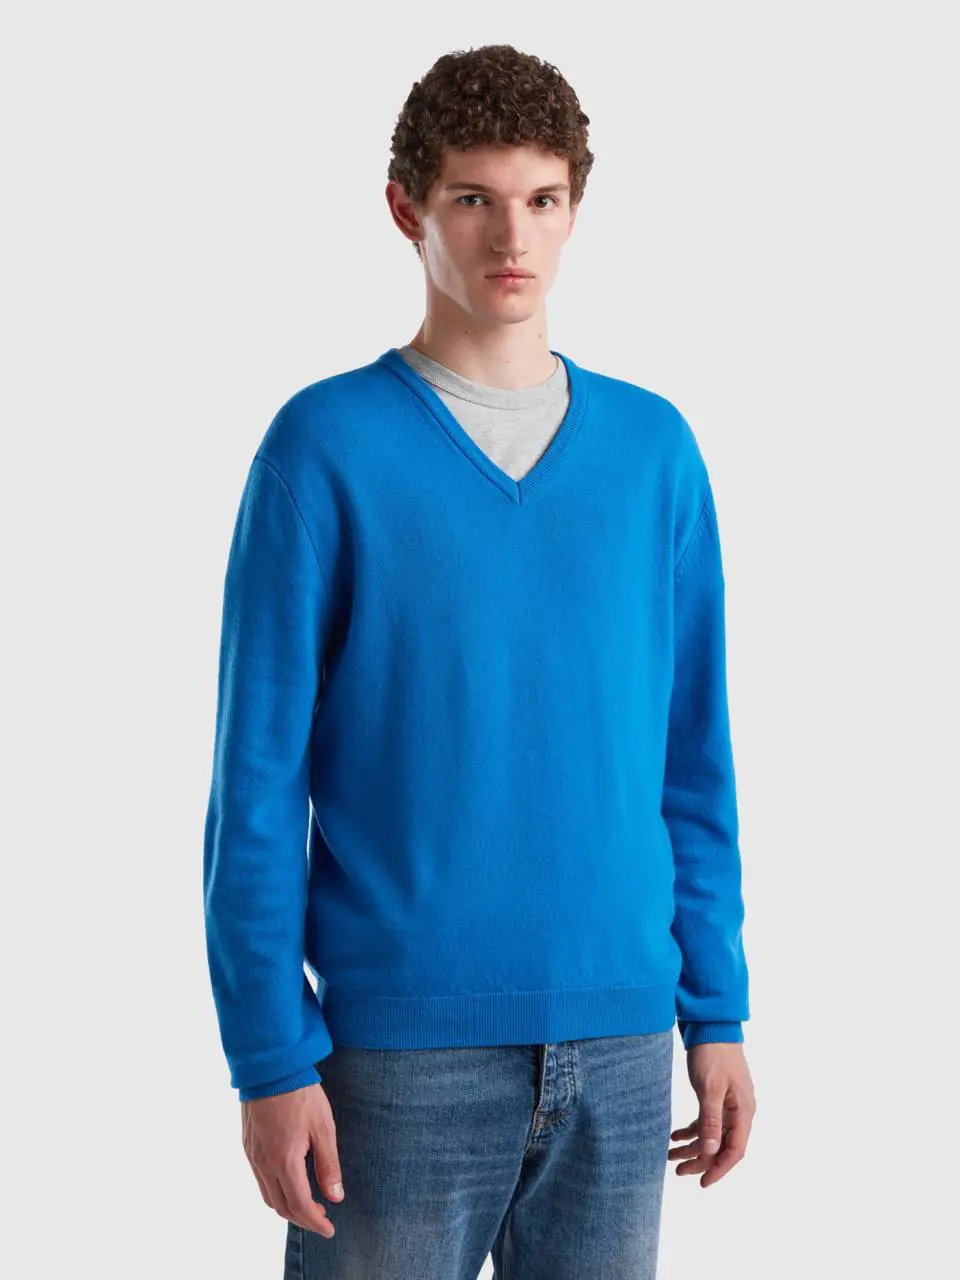 Benetton cornflower blue v-neck sweater in pure merino wool. 1